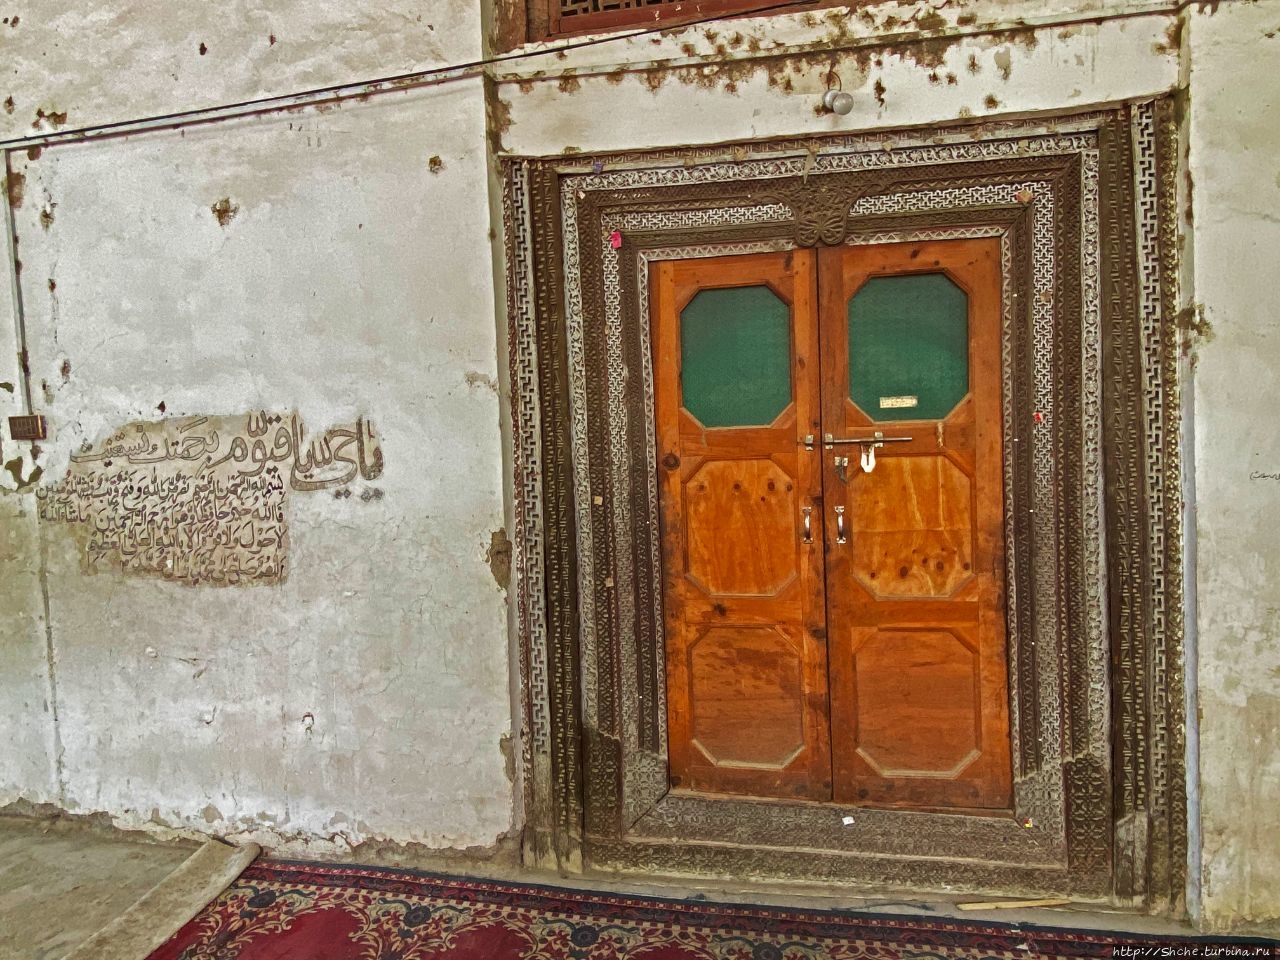 Мечеть Ханда Муалла Шигар, Пакистан